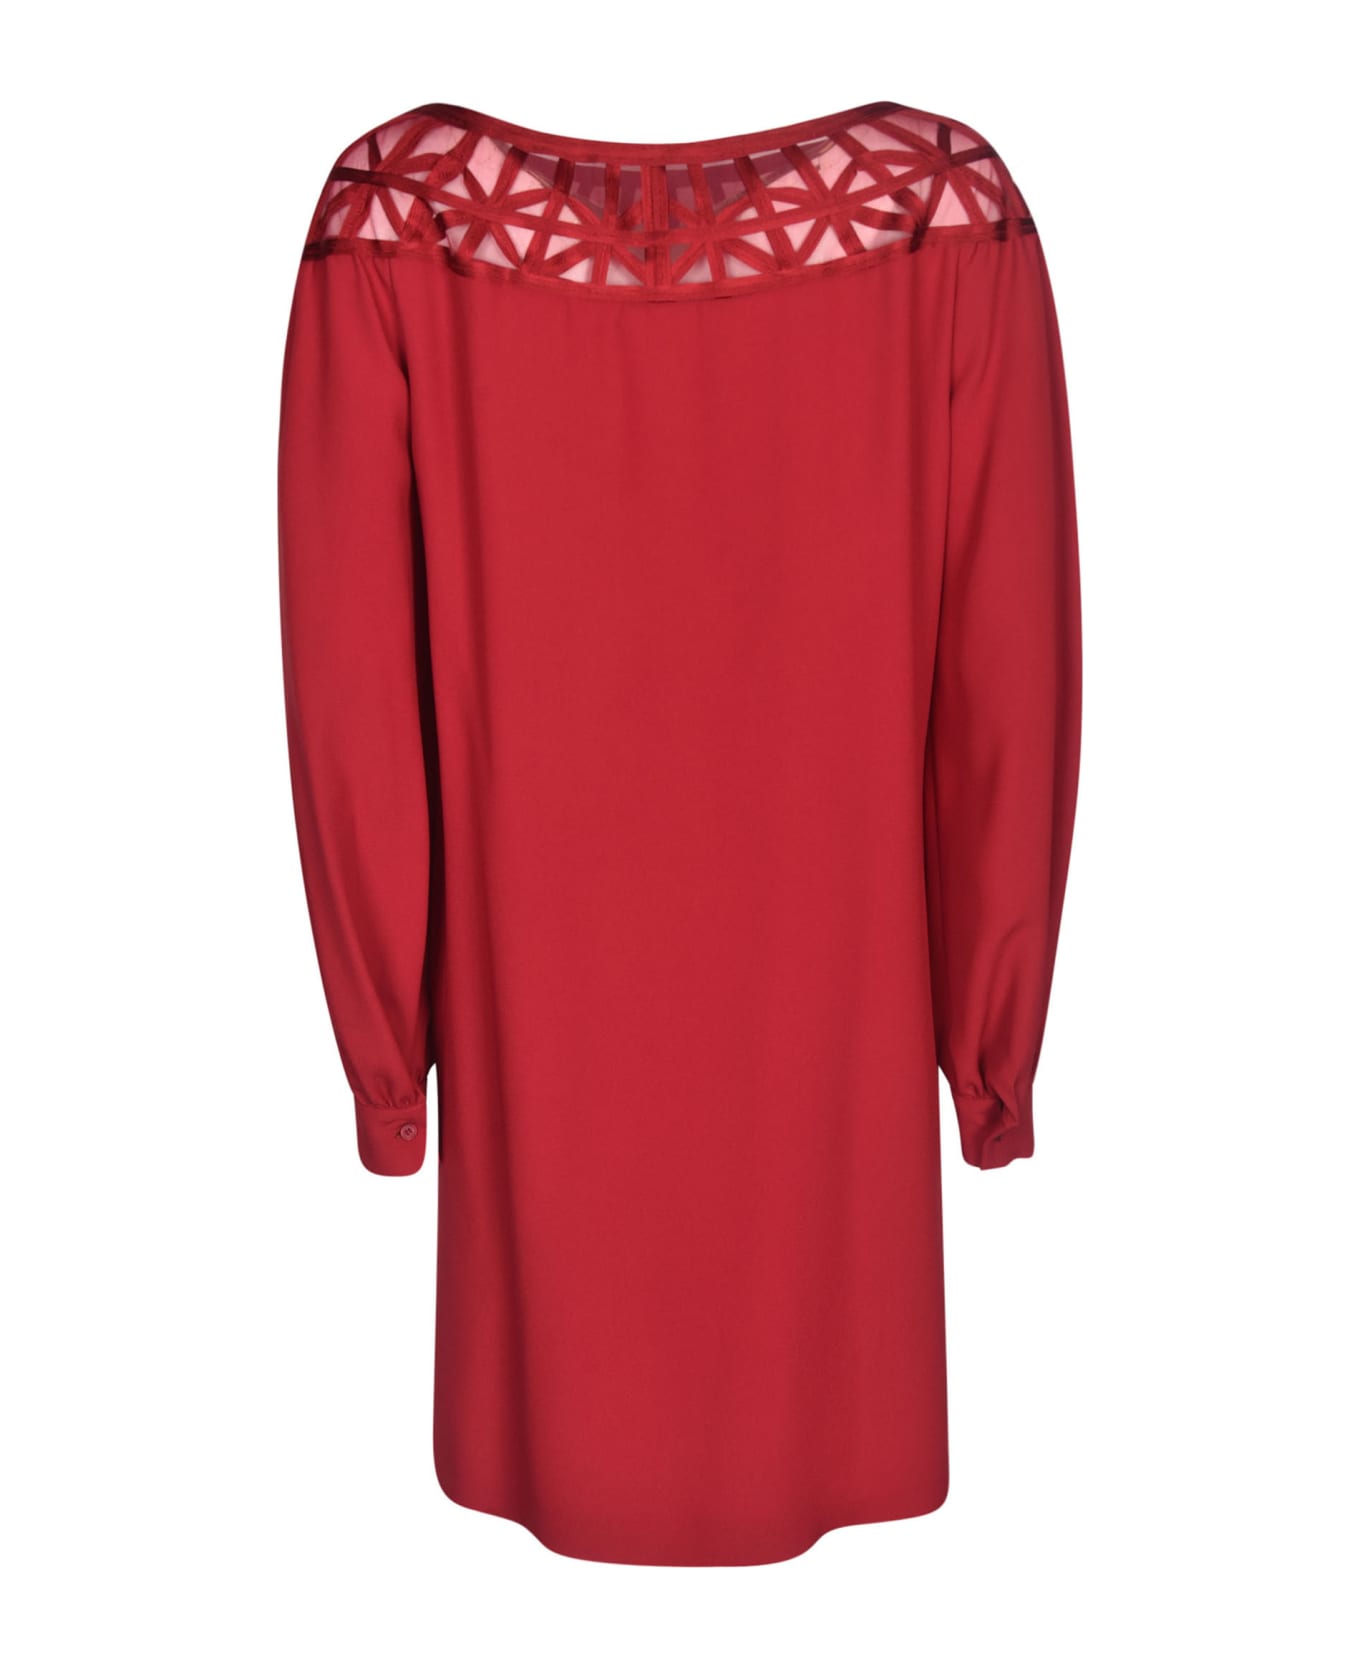 Alberta Ferretti Lace Panel Patterned Long-sleeved Dress - Red